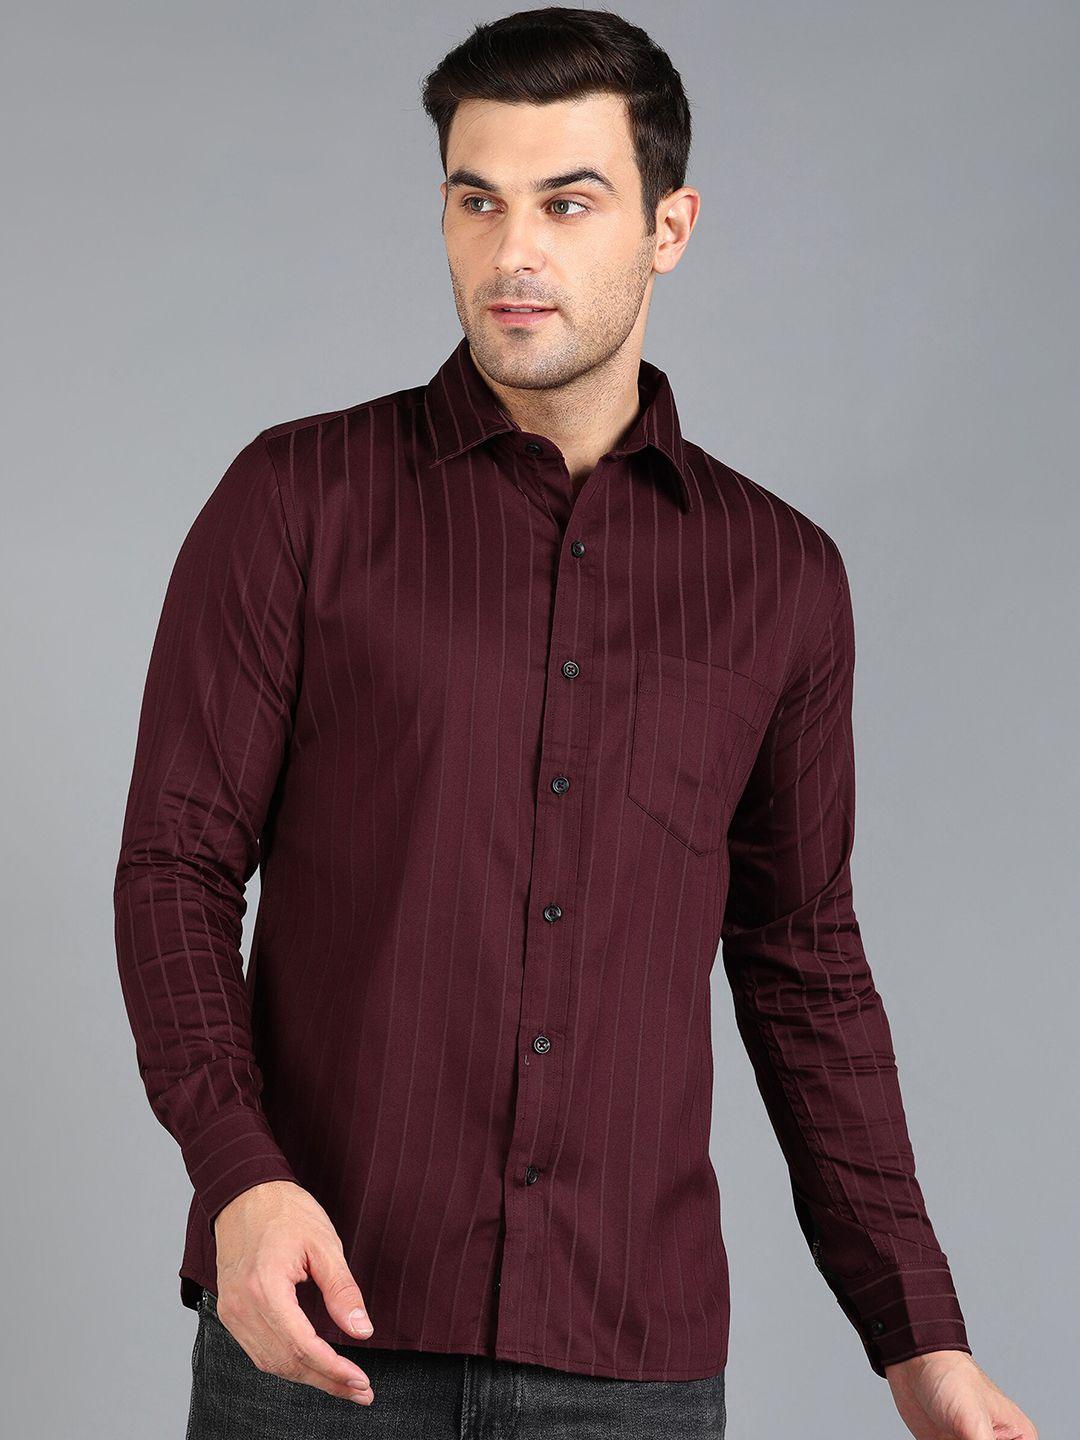 znx-clothing-men-maroon-premium-slim-fit-opaque-striped-formal-shirt